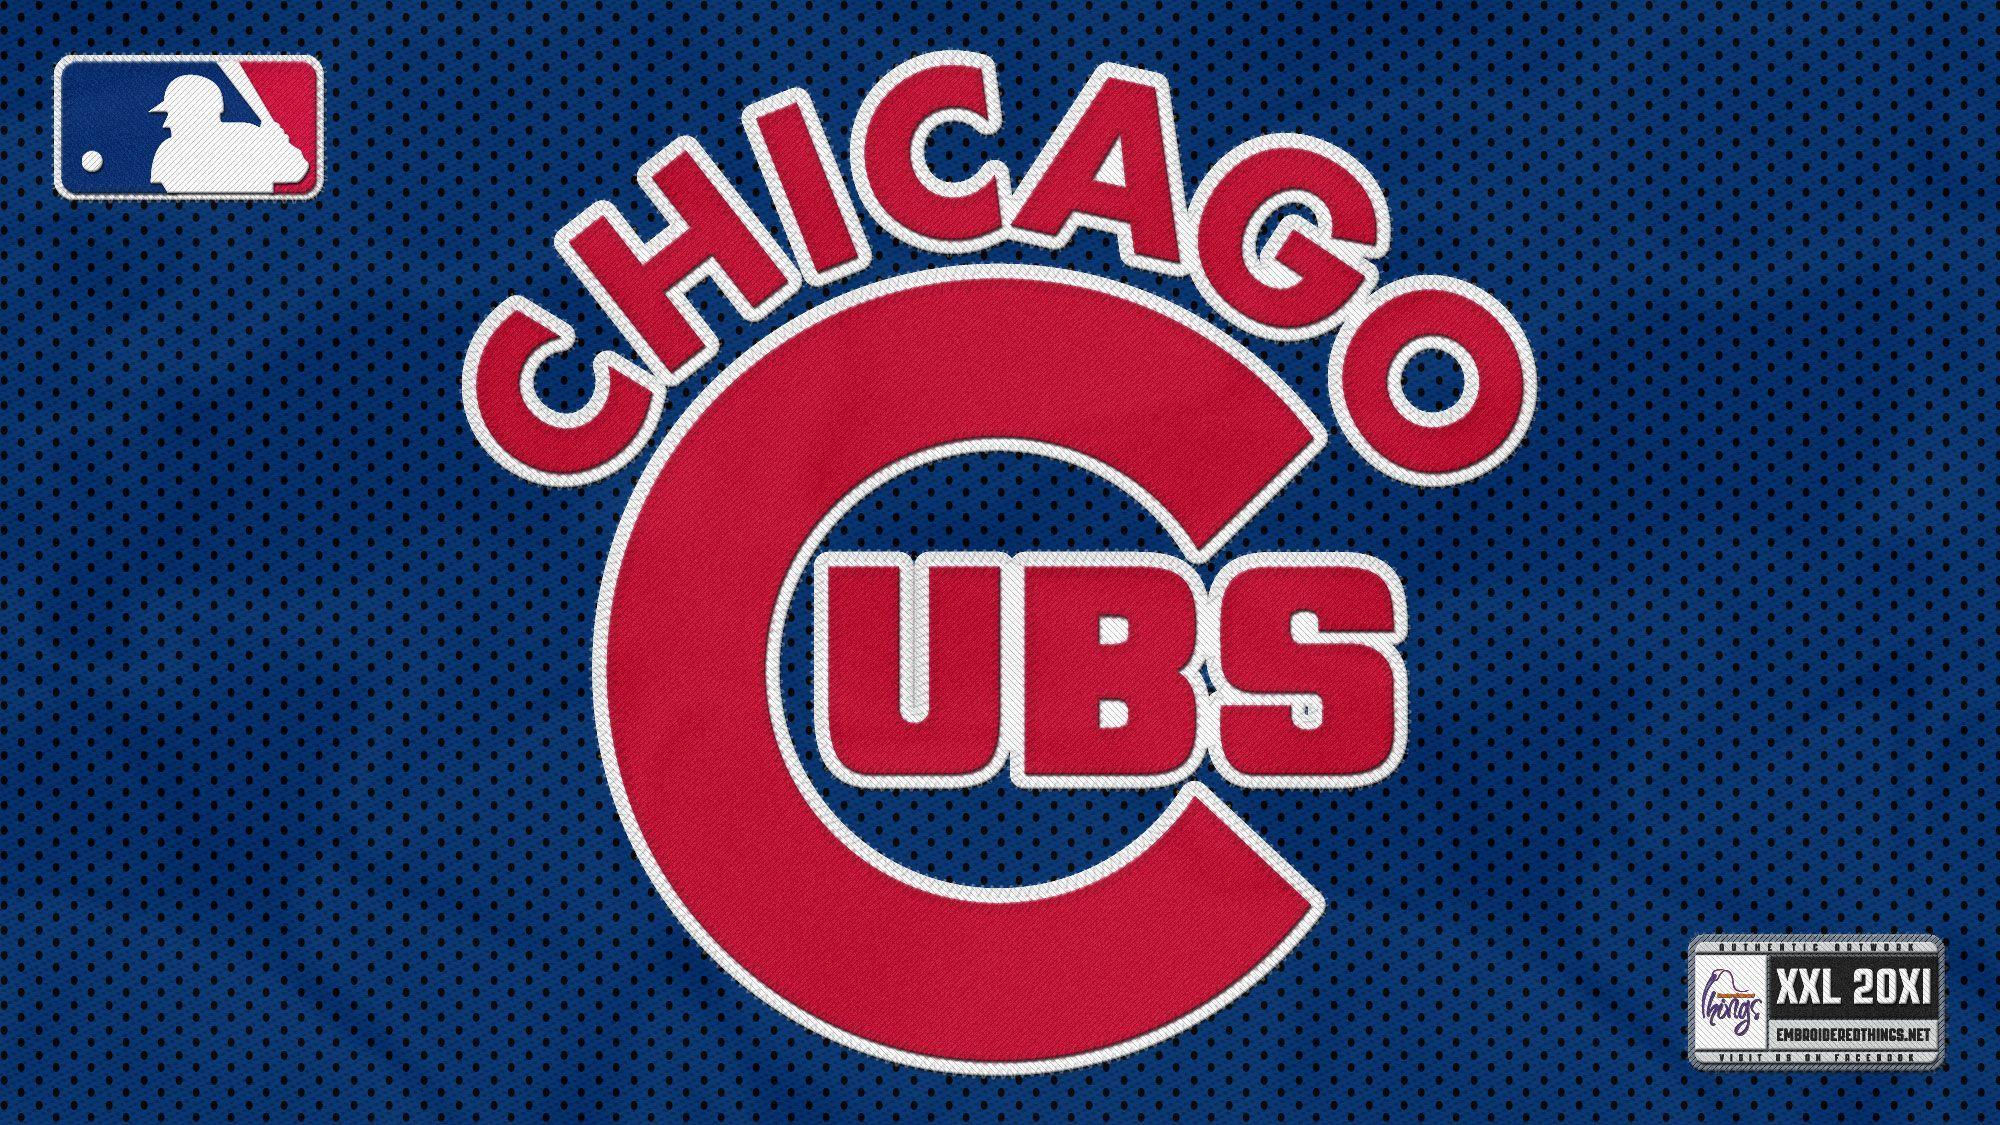 Chicago Cubs Scores